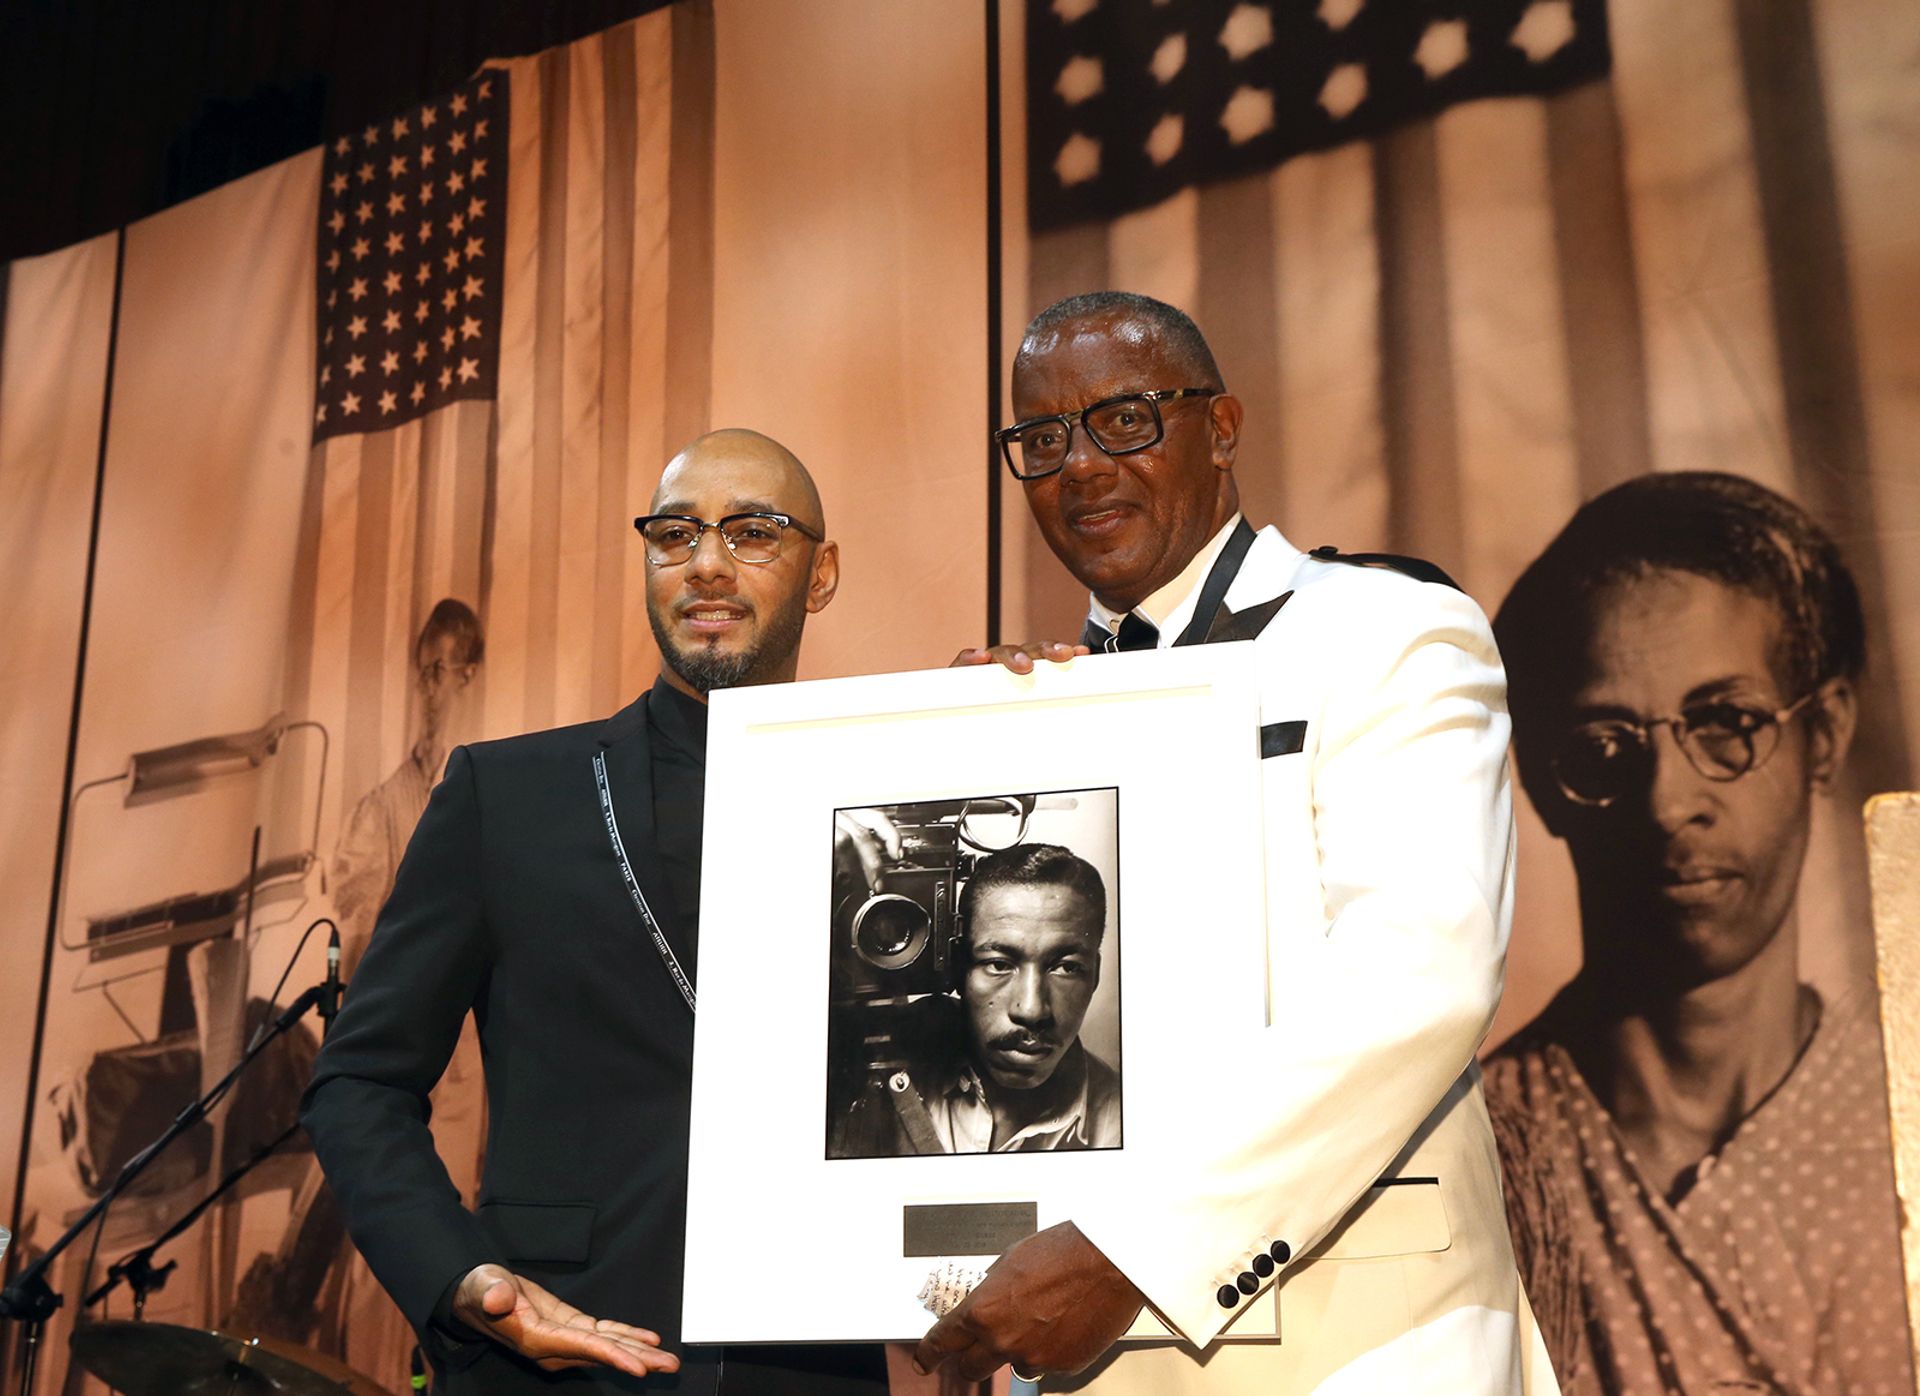 Kasseem Dean, aka Swizz Beatz, honours the documentary photographer Jamel Shabazz at the Gordon Parks Foundation gala Photo by Bennett Raglin/Getty Images for Gordon Parks Foundation